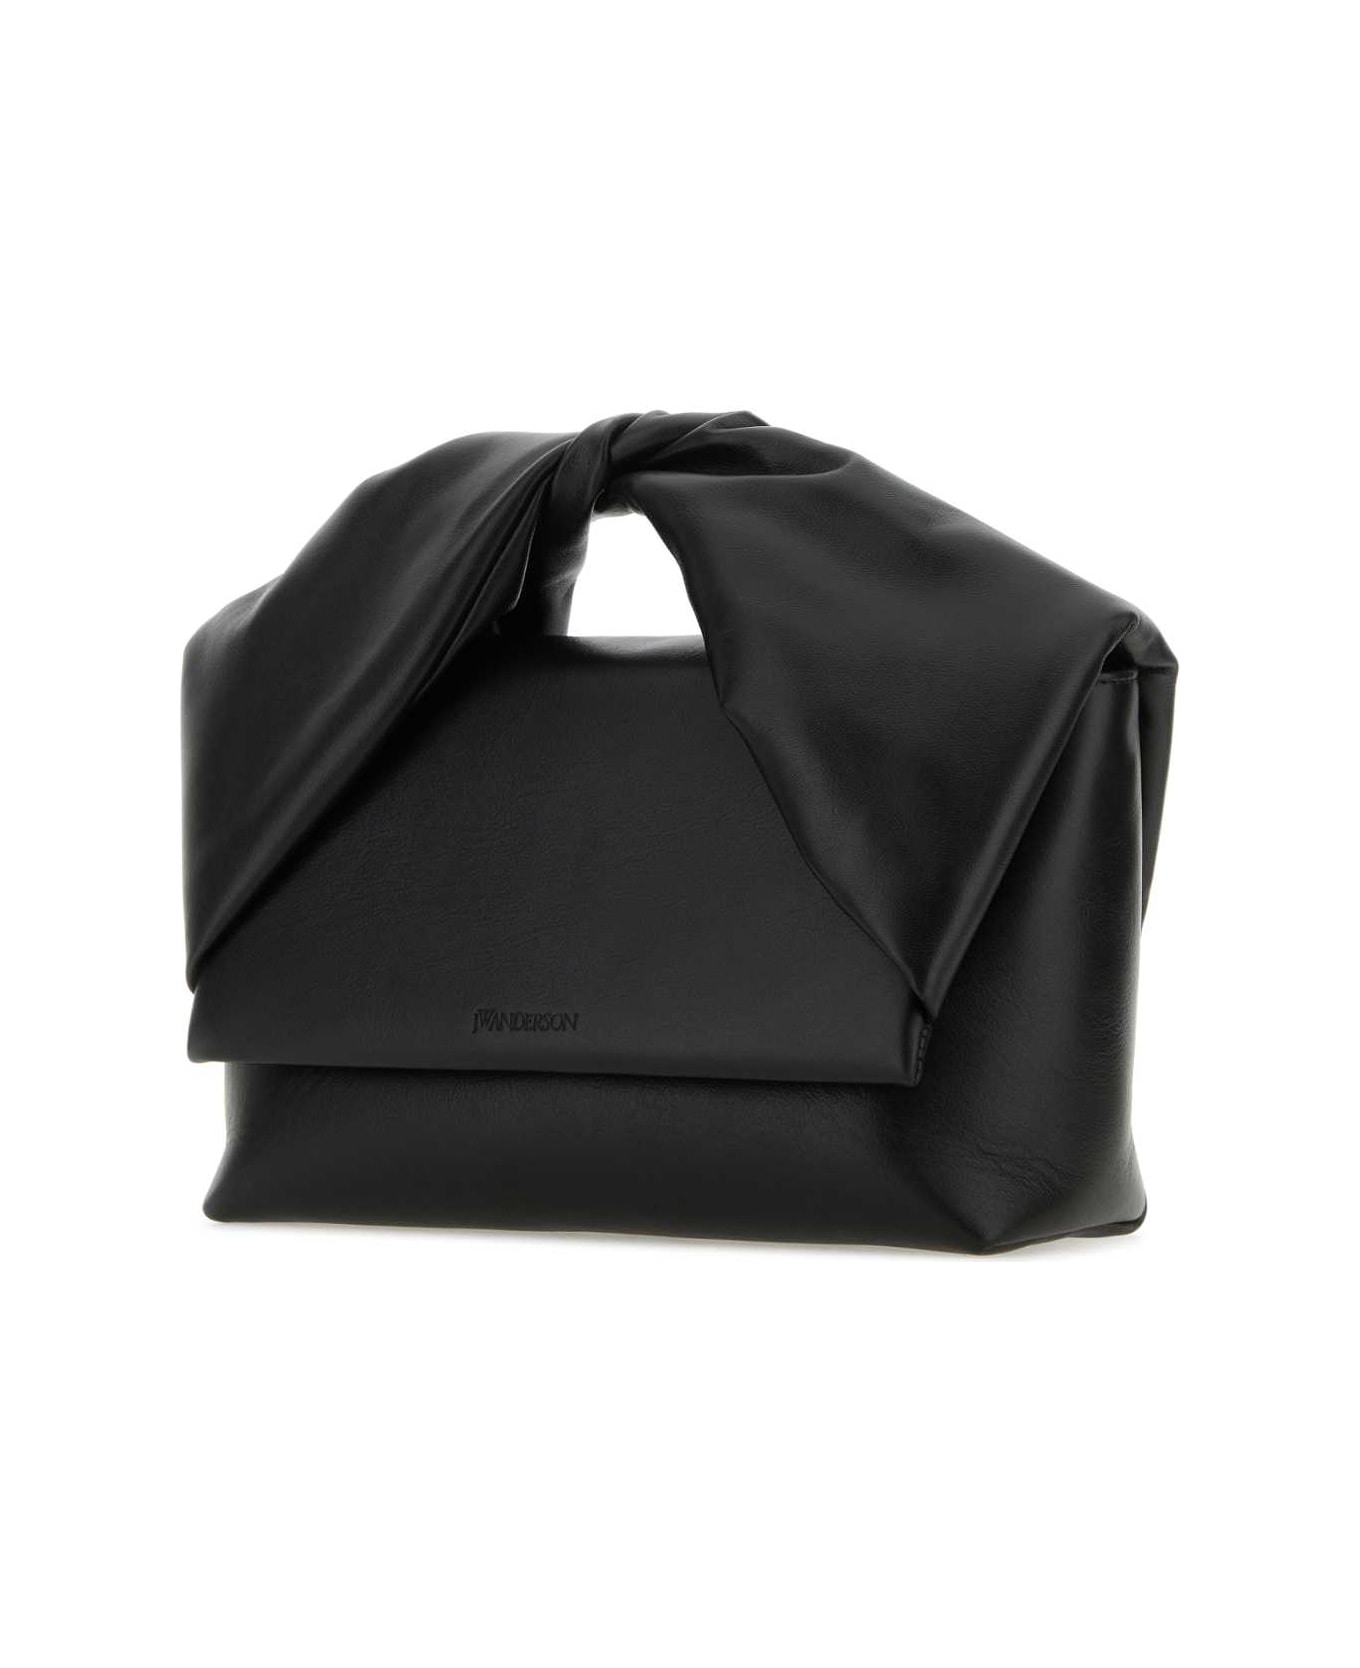 J.W. Anderson Black Leather Bag - Black トートバッグ